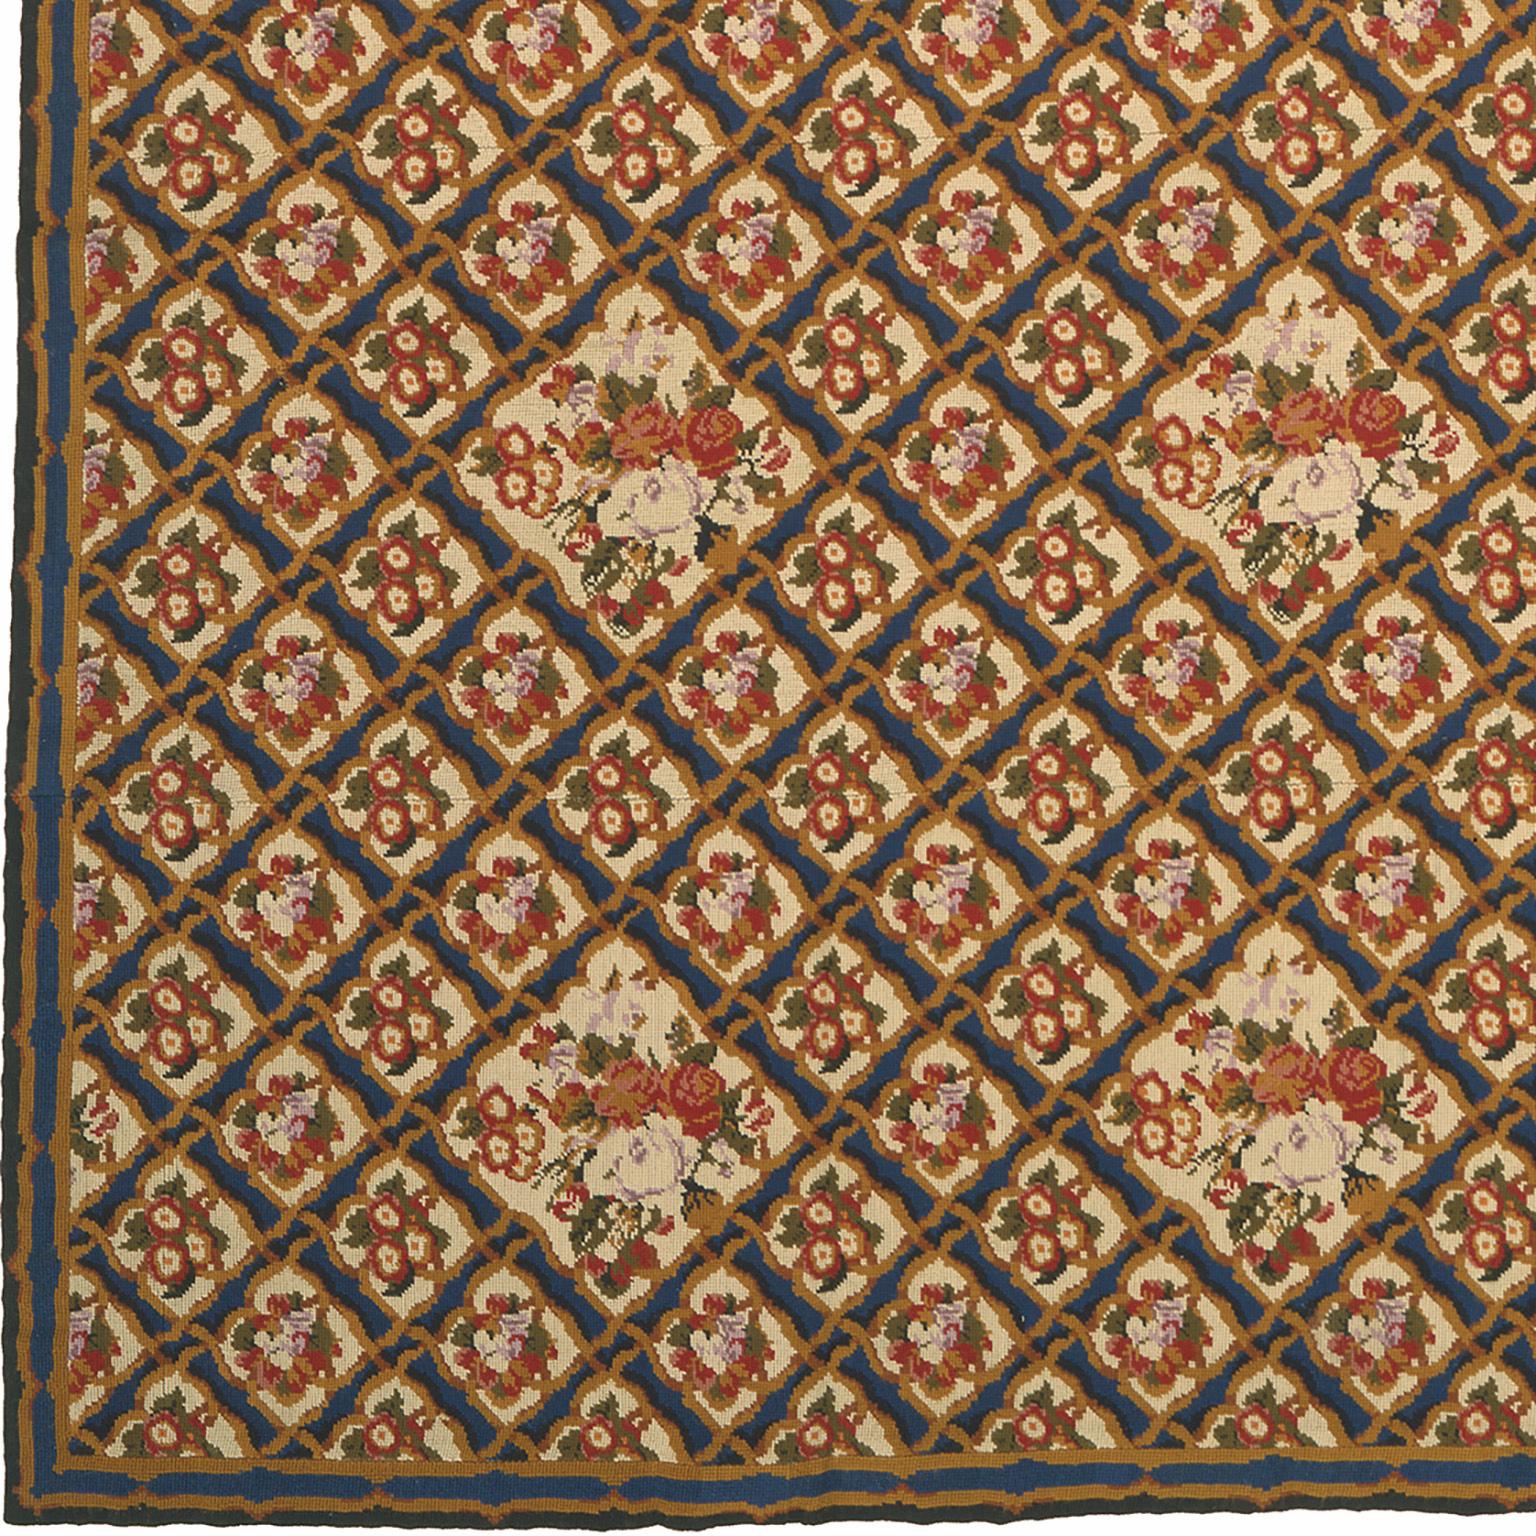 Late 19th century English needlepoint carpet
England, 1890.